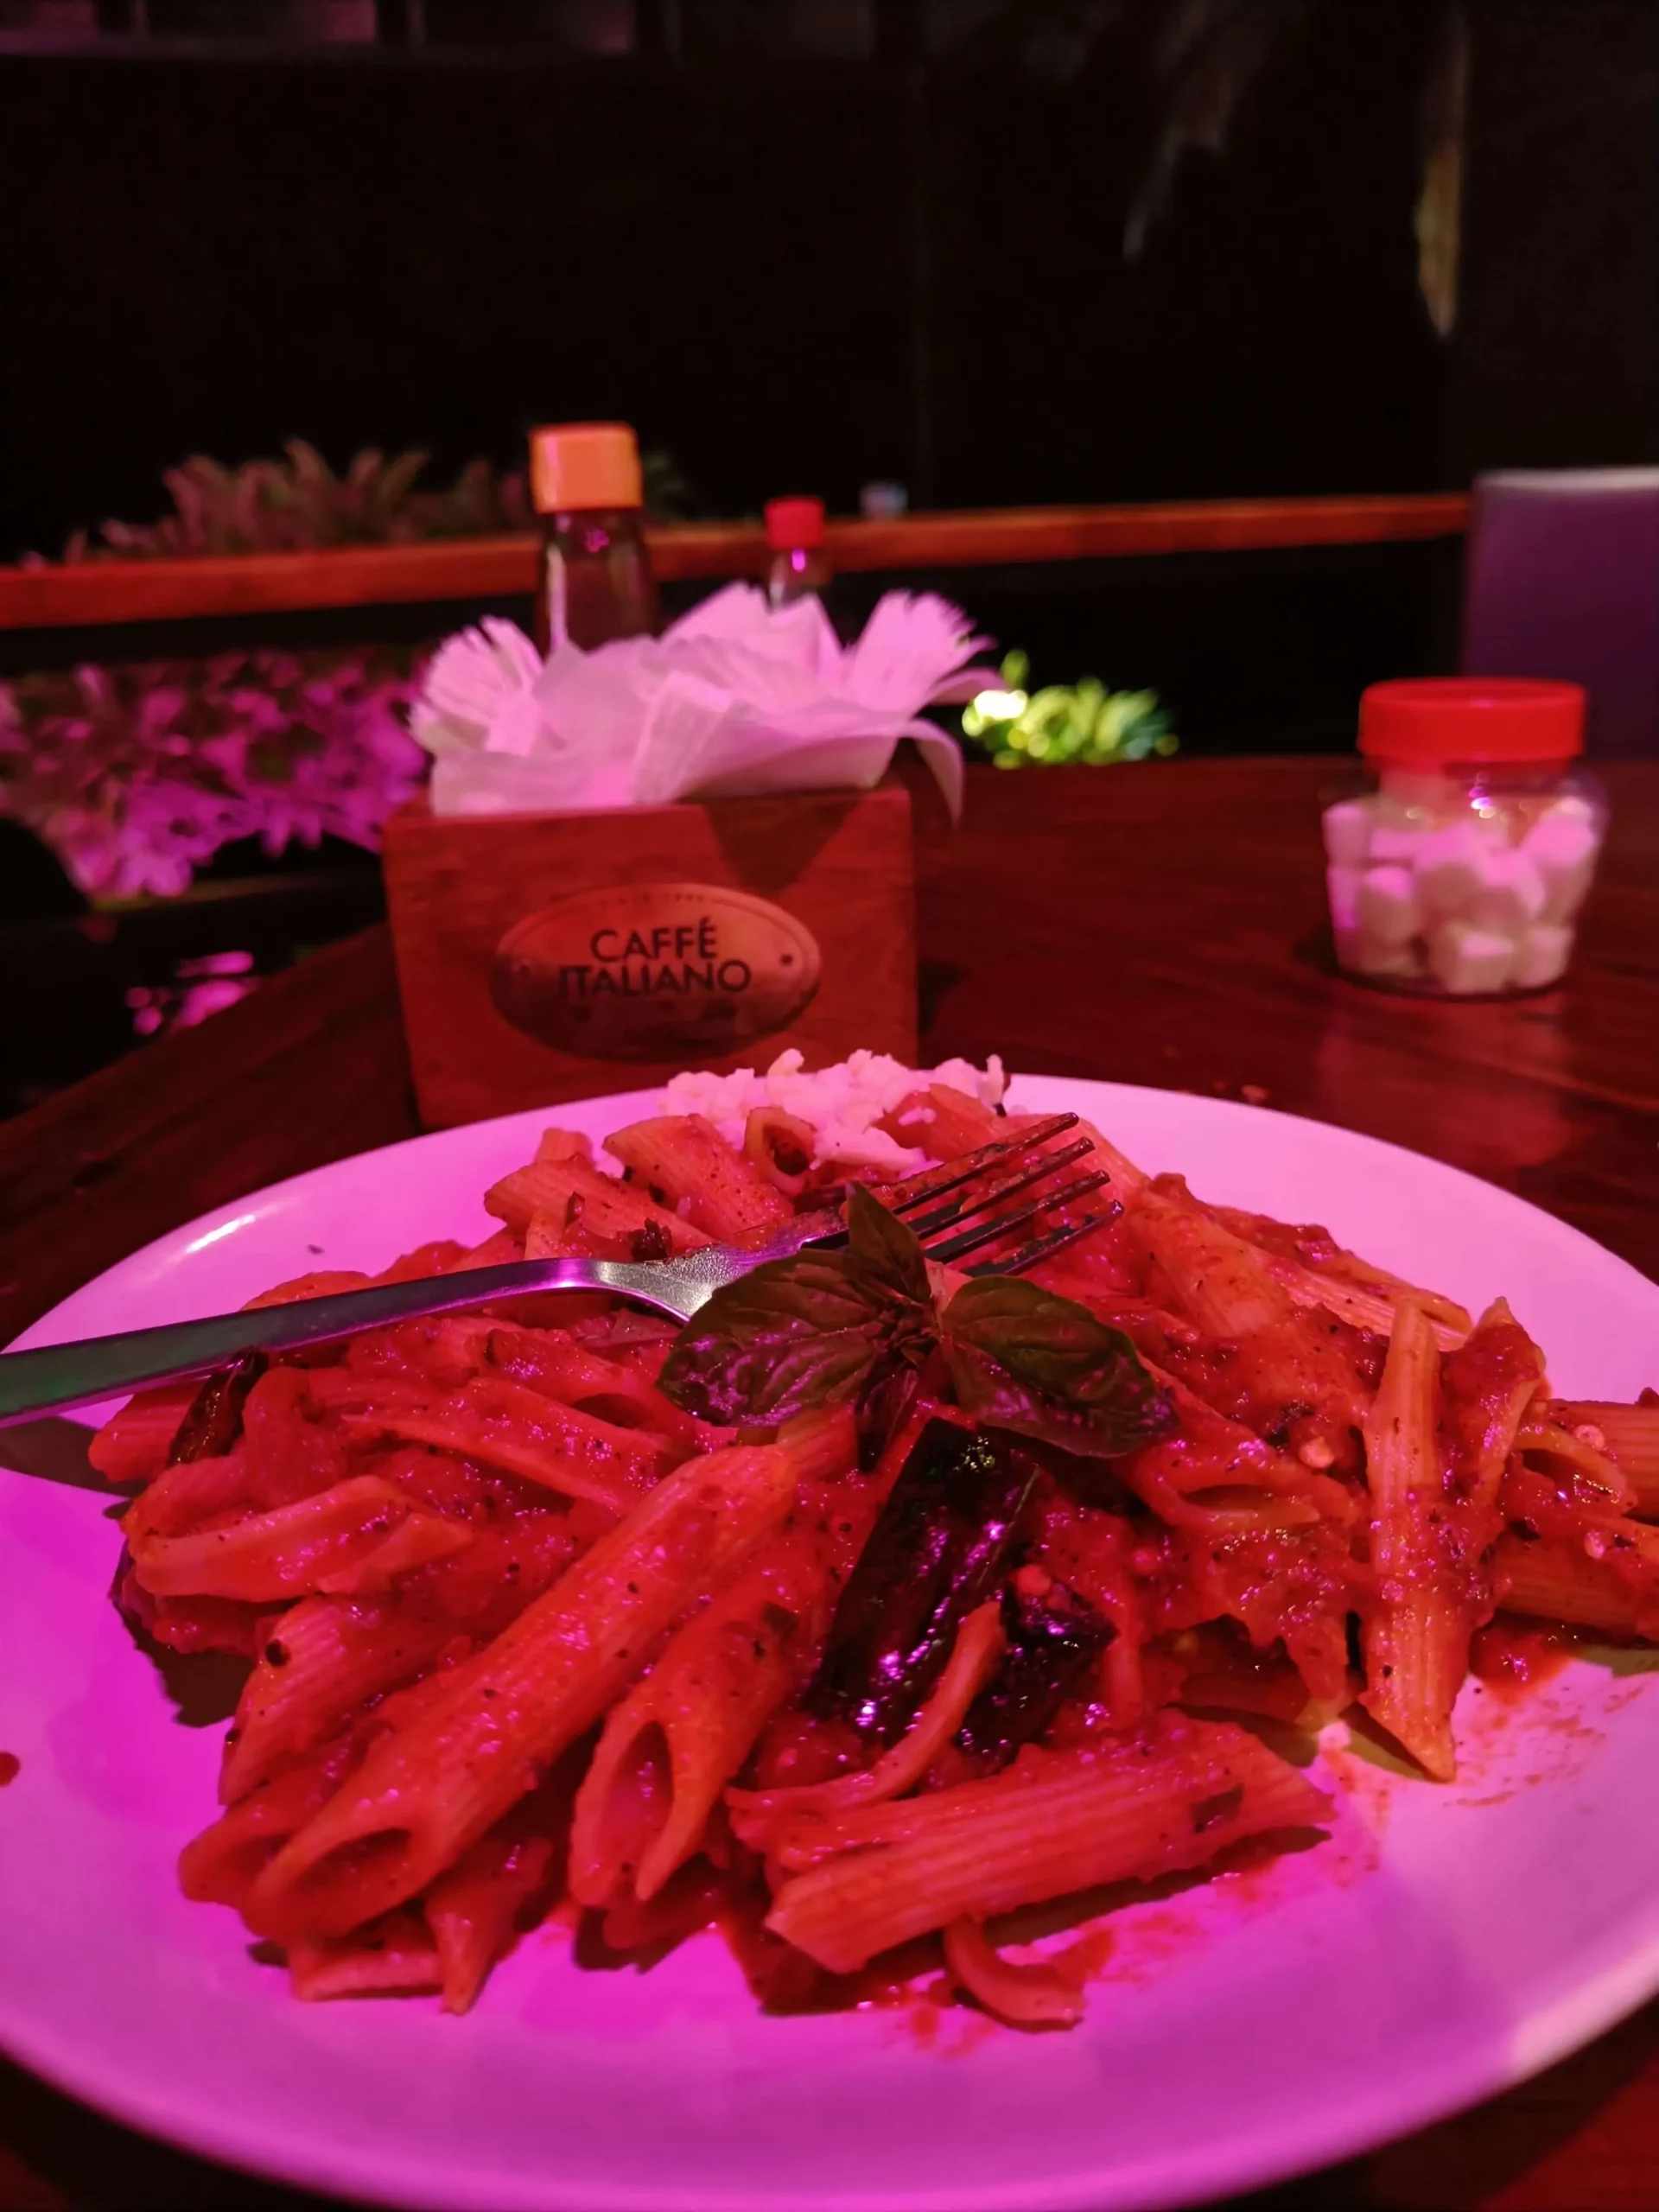 Delicious pasta at Cafe Italiano